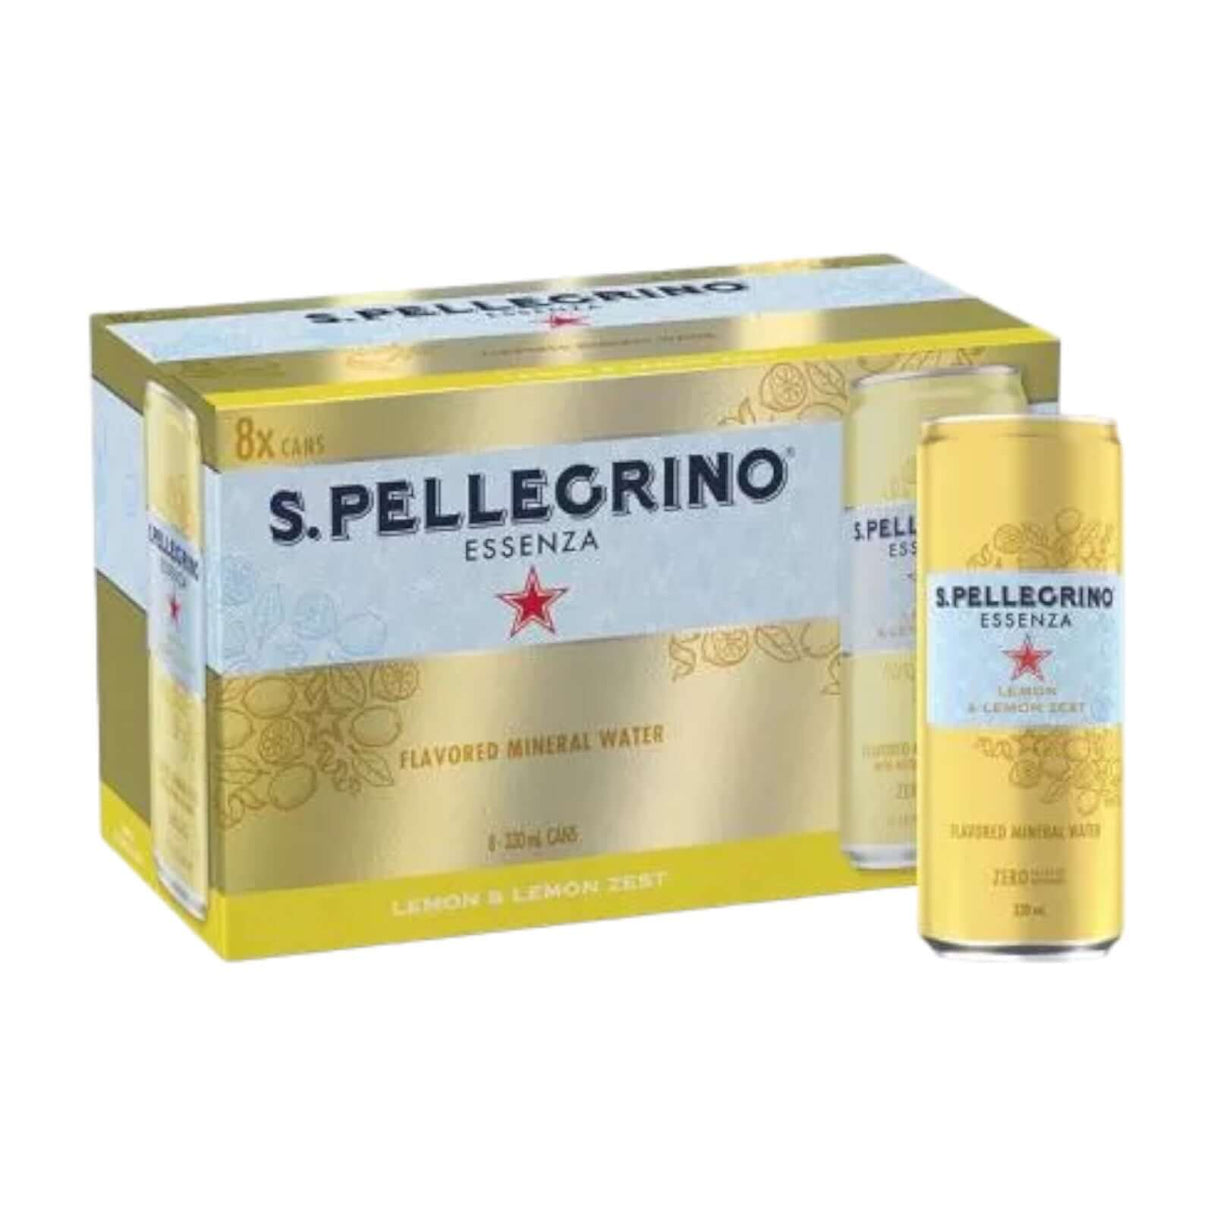 S.Pellegrino Essenza lemon & lemon